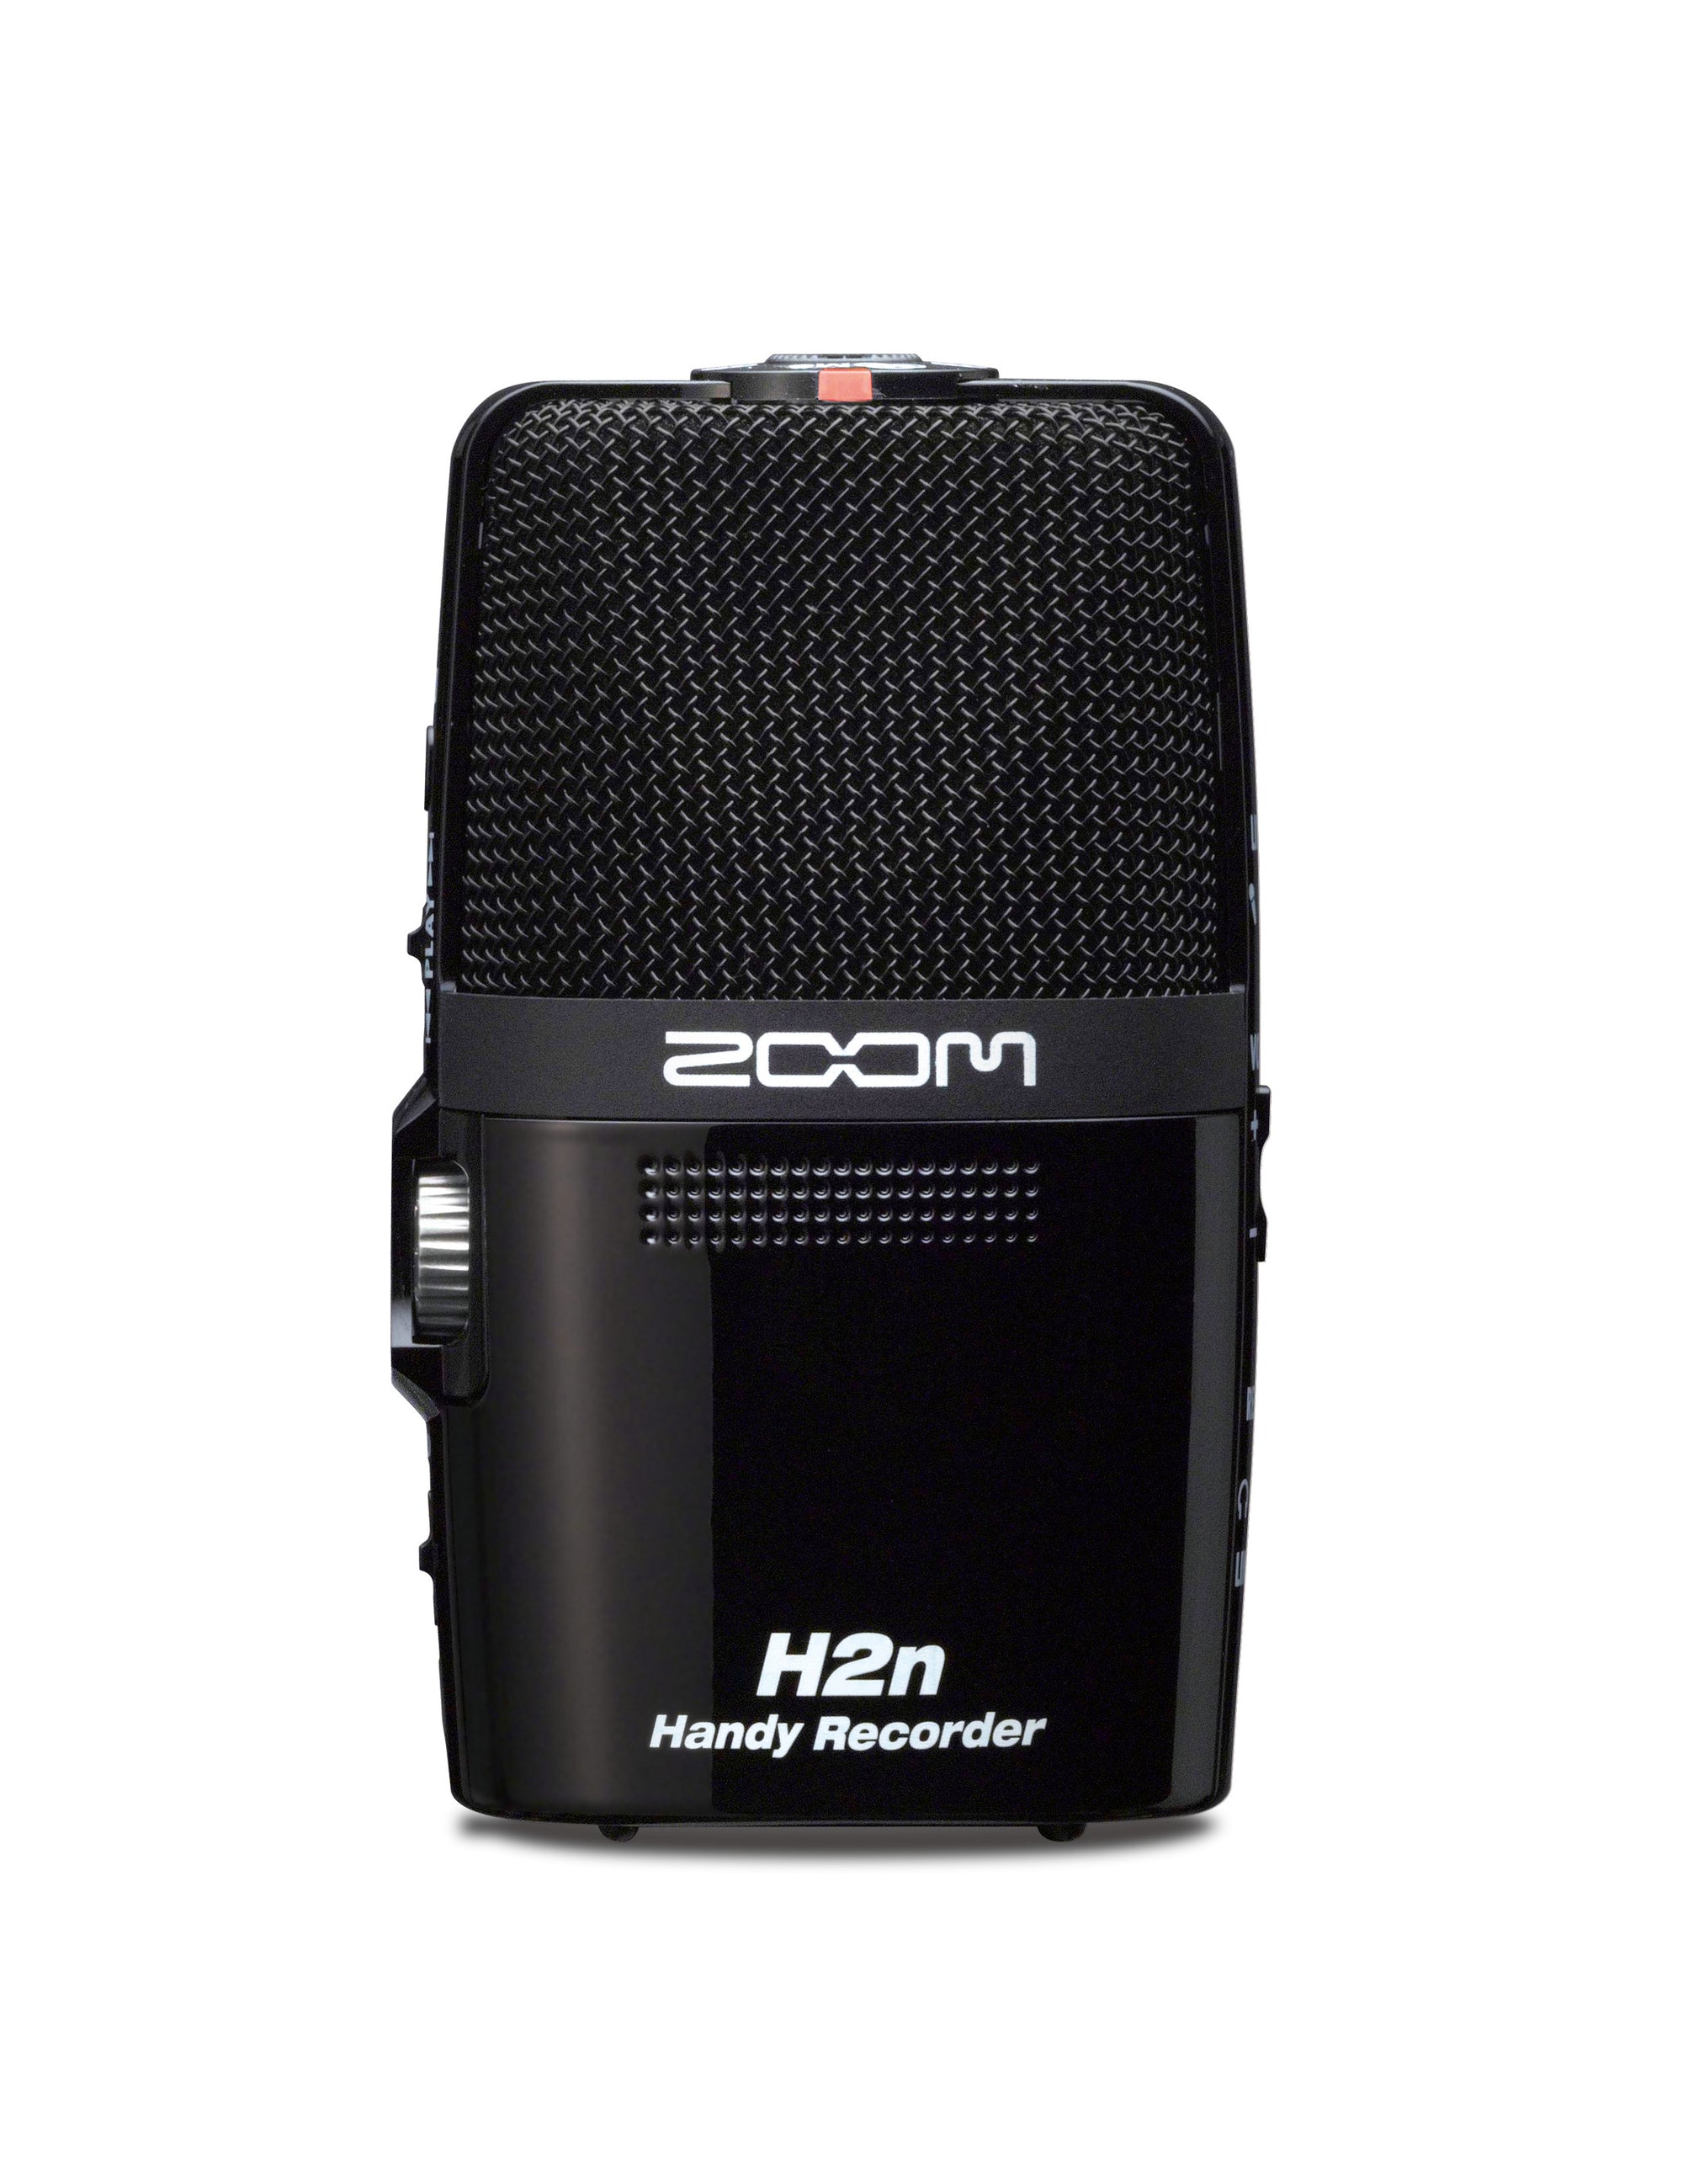 Zoom H2n - Handy Recorder - 305broadcast